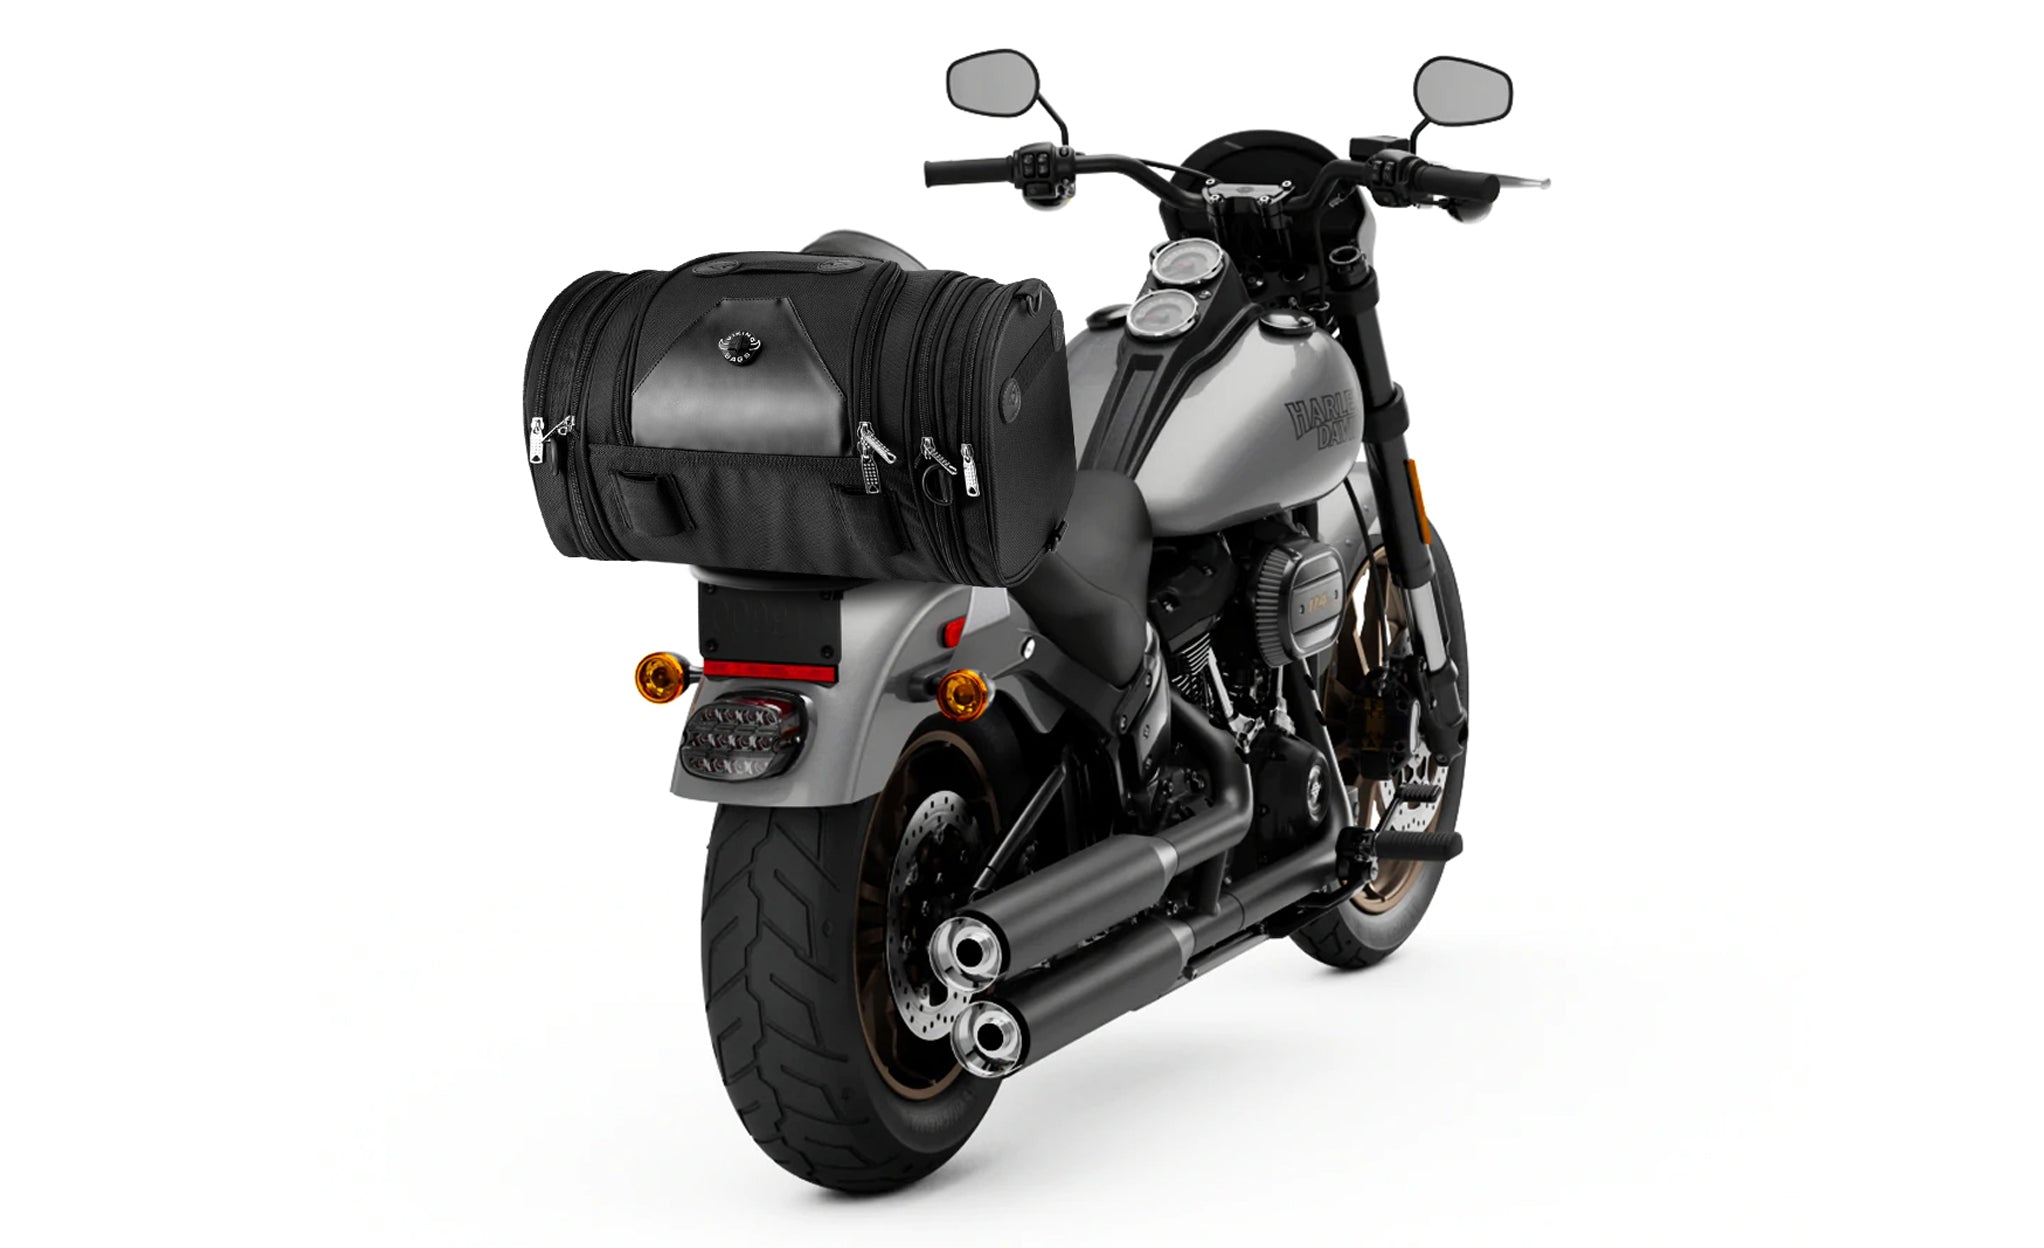 Viking Axwell Small Suzuki Motorcycle Roll Bag Bag on Bike View @expand